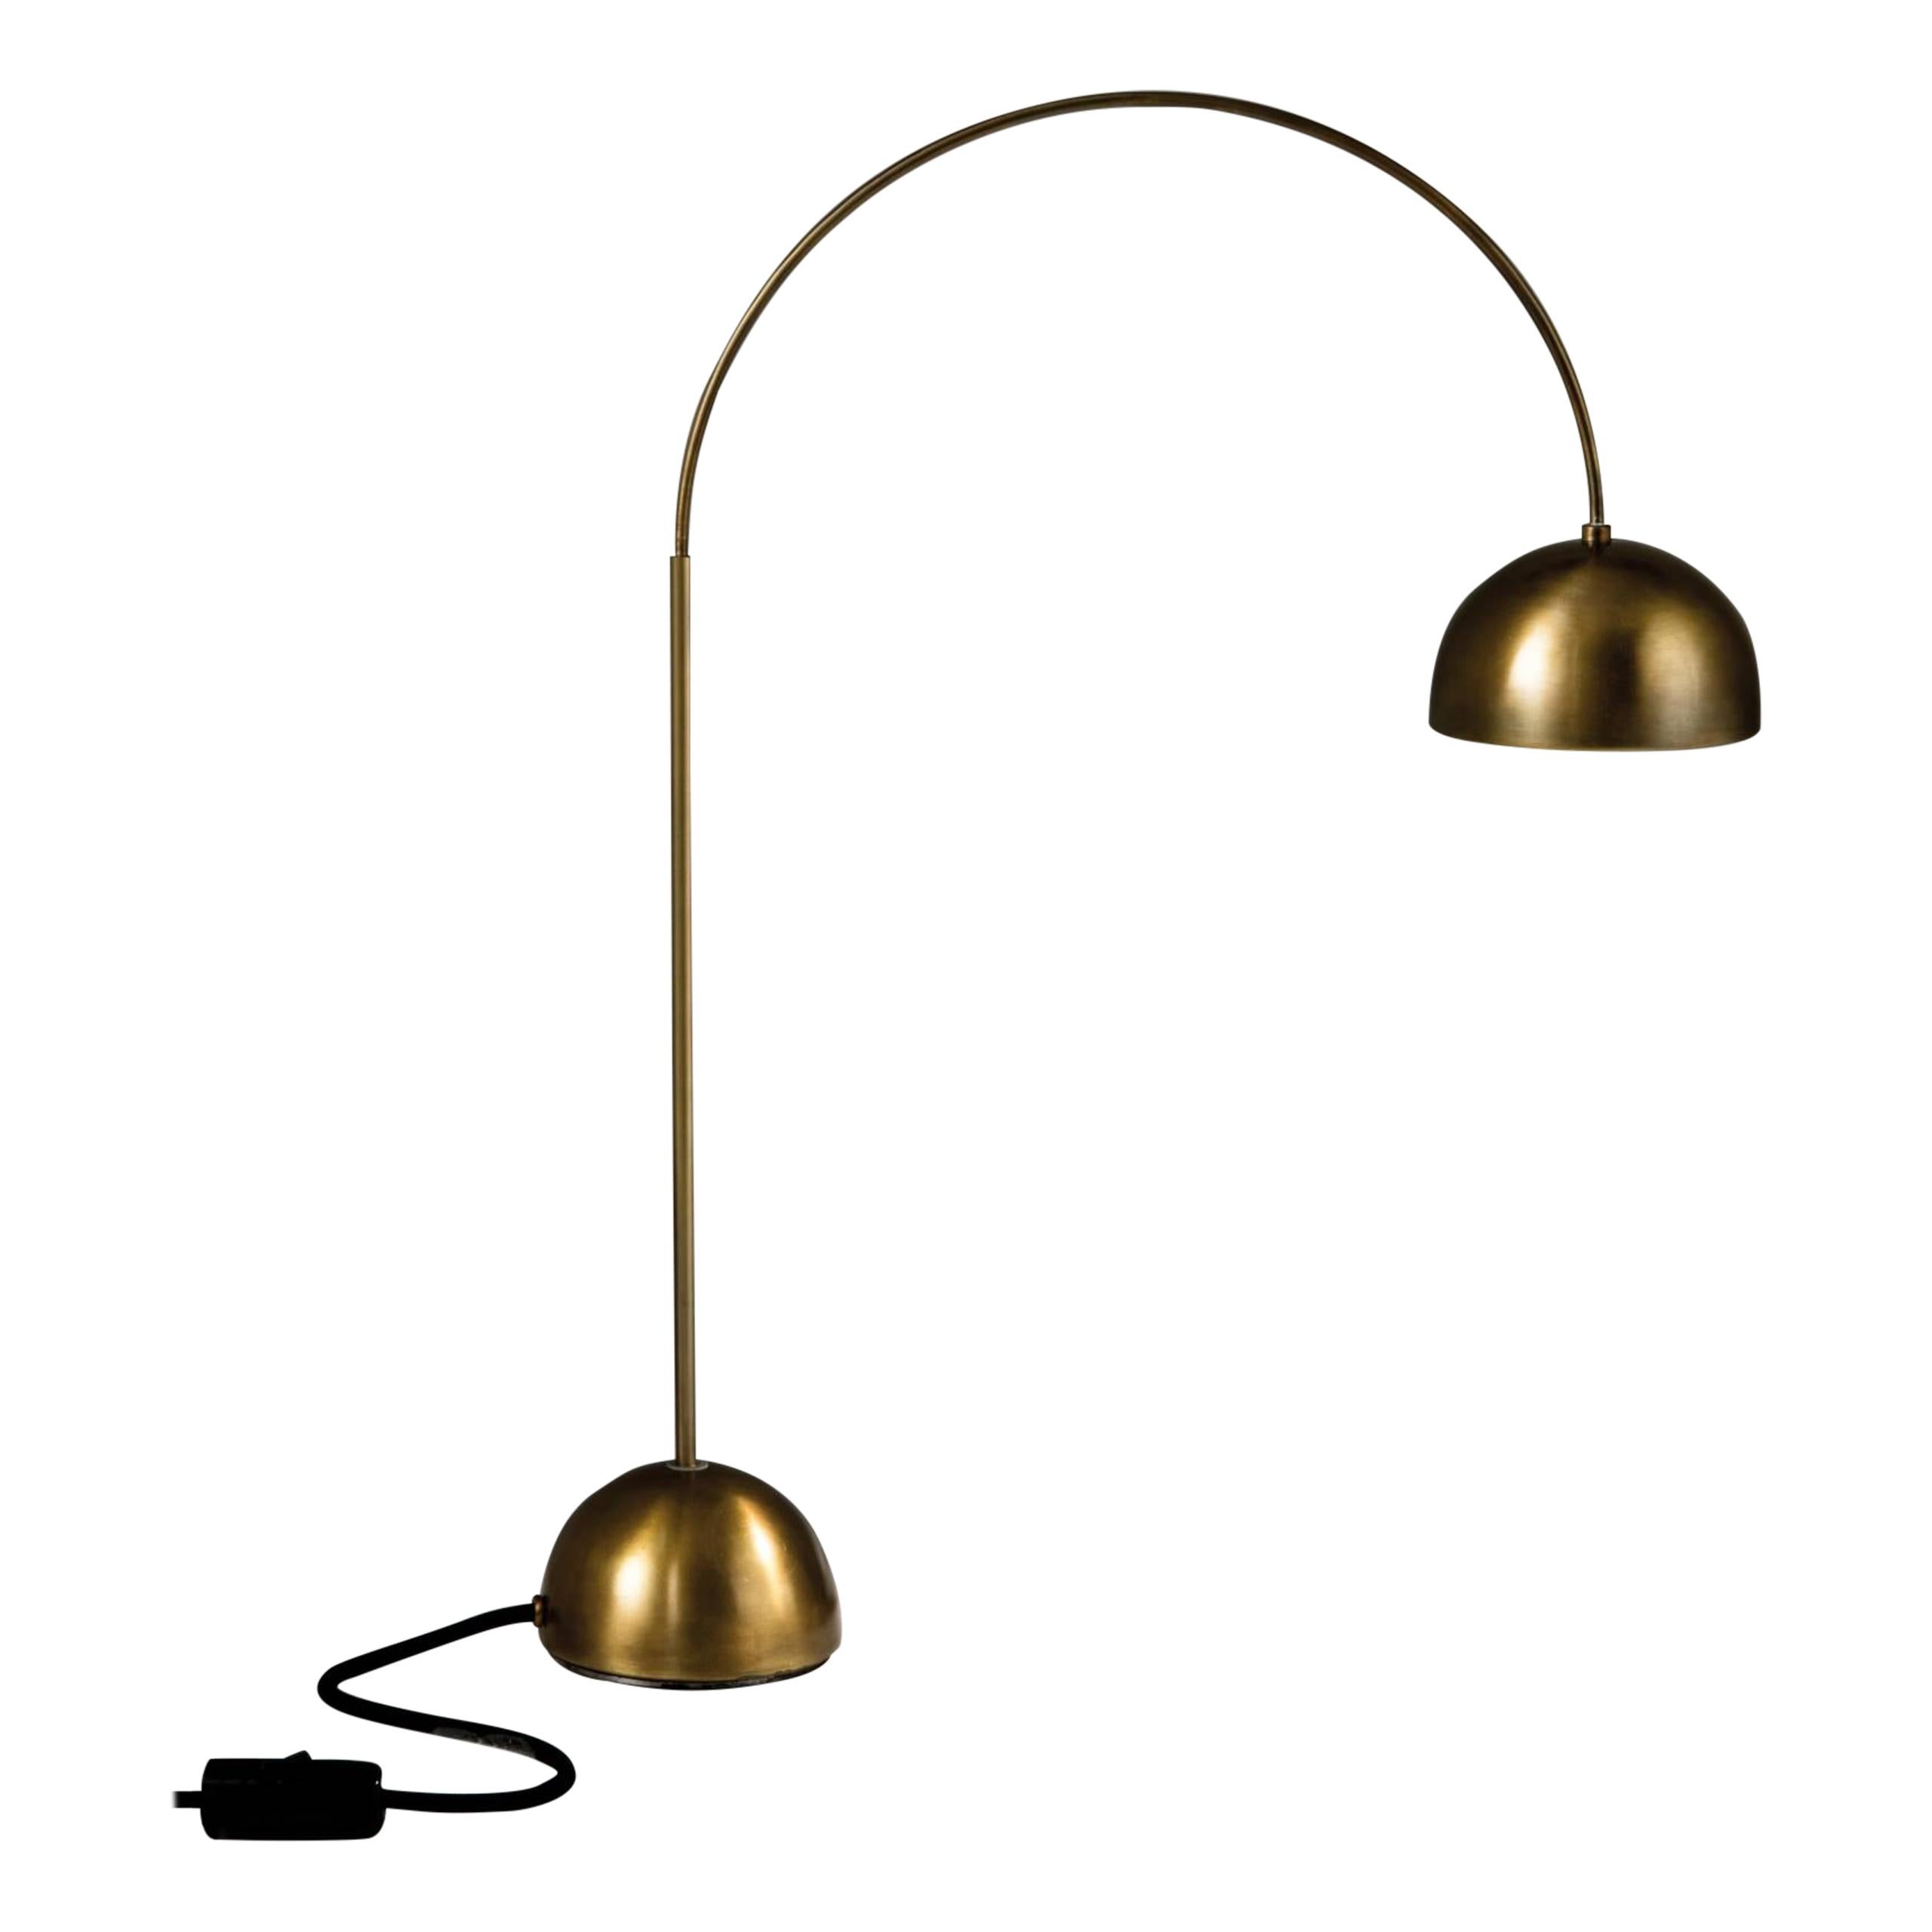 Laurameroni "Satellite CG 45" Modern Arc Table Lamp in Burnished Brass